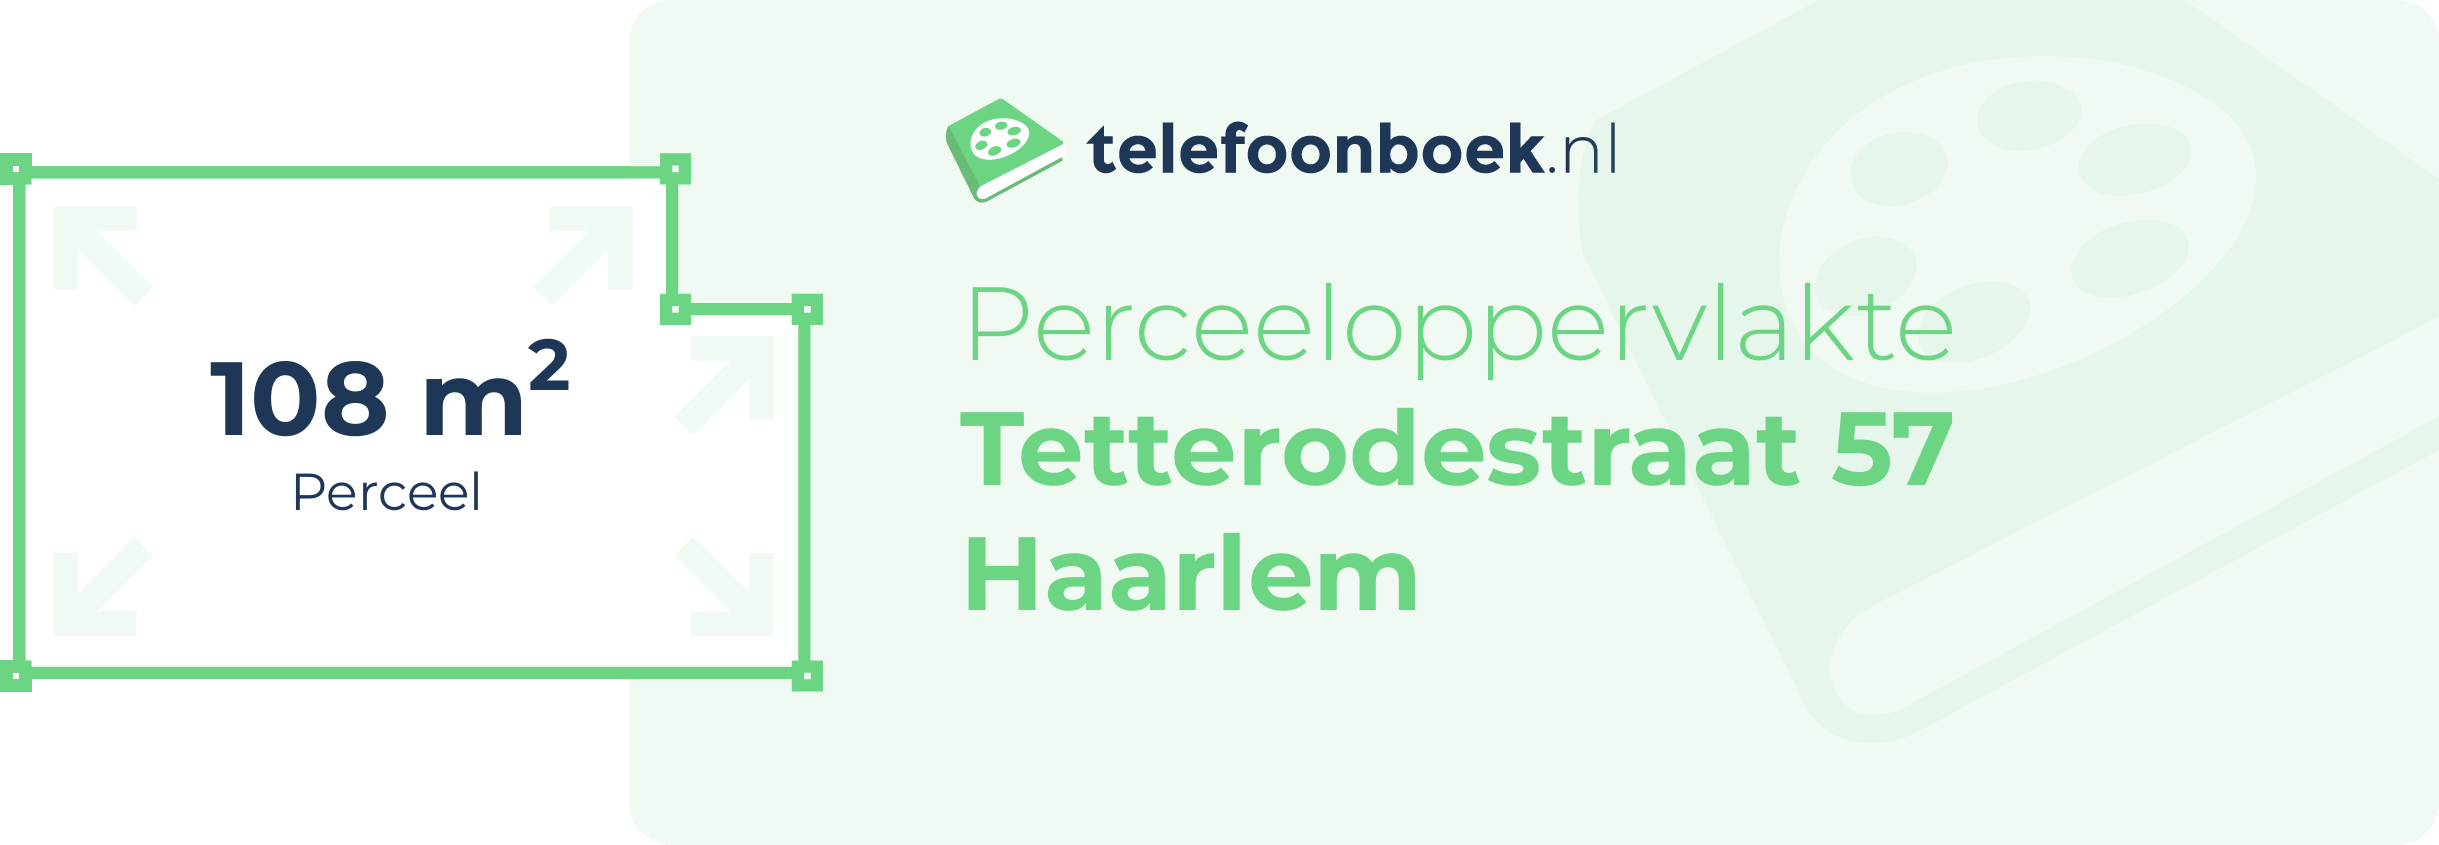 Perceeloppervlakte Tetterodestraat 57 Haarlem